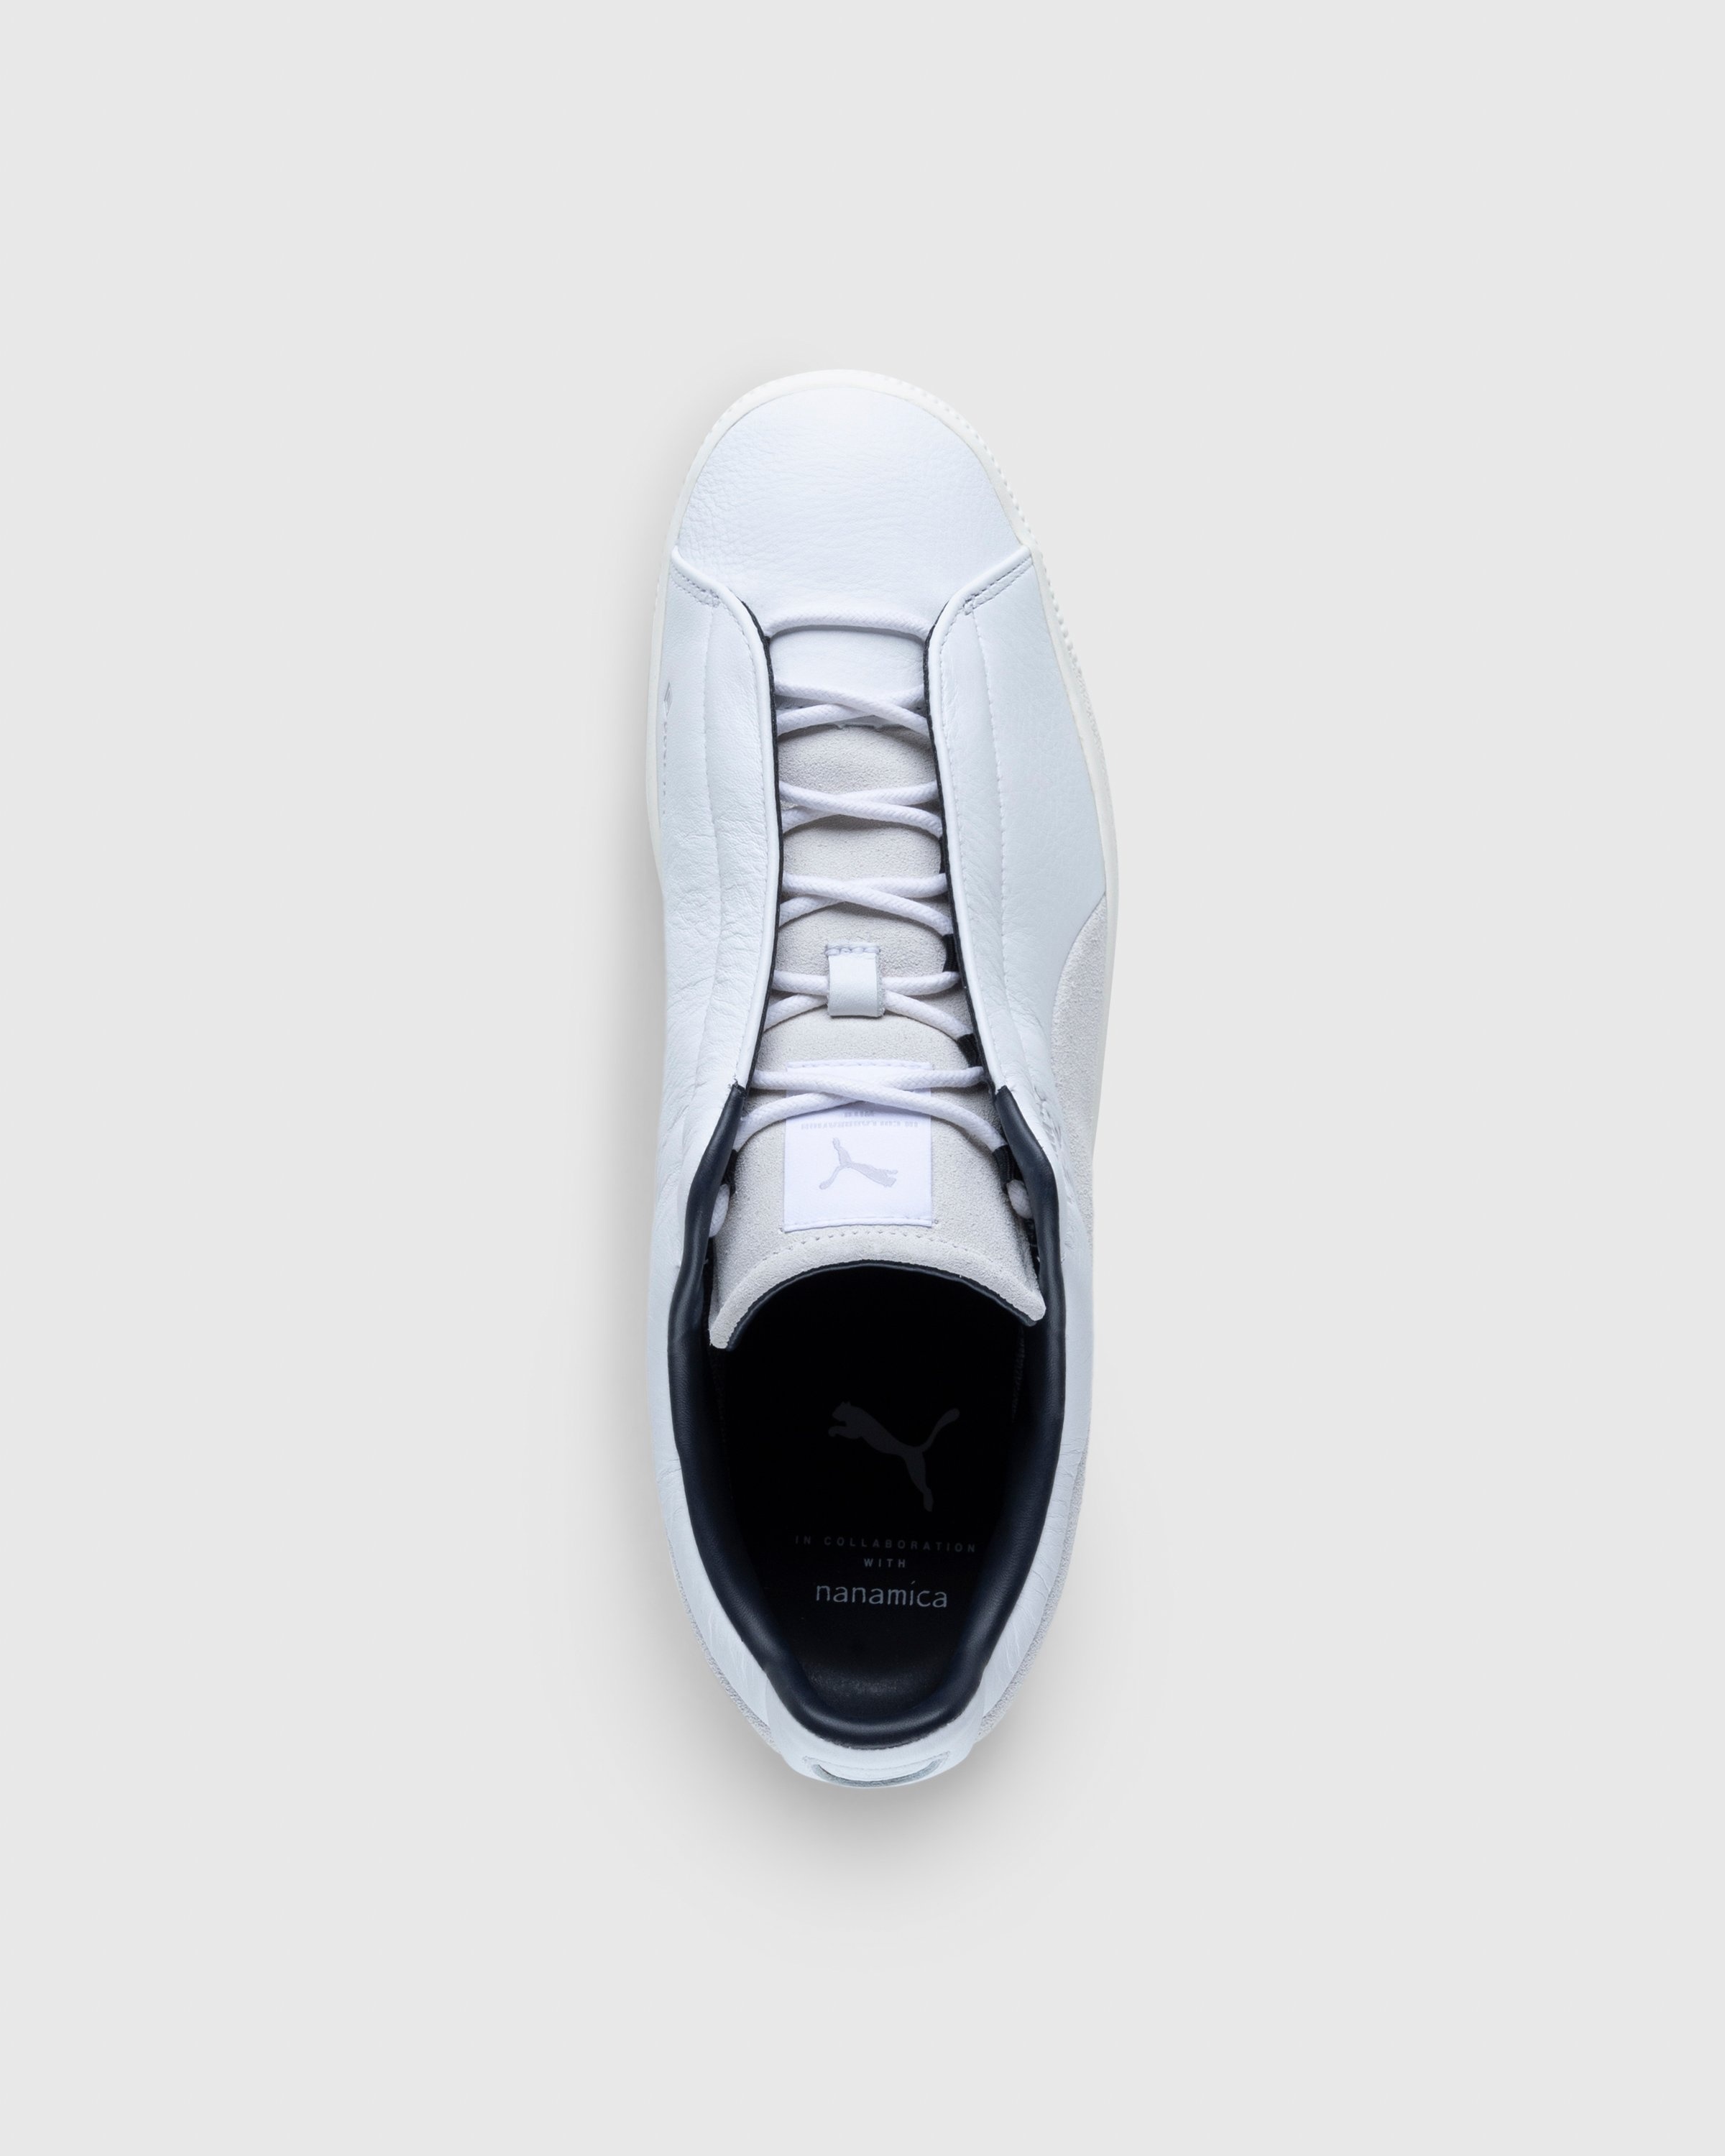 Puma x Nanamica – Clyde GORE-TEX White - Sneakers - White - Image 5